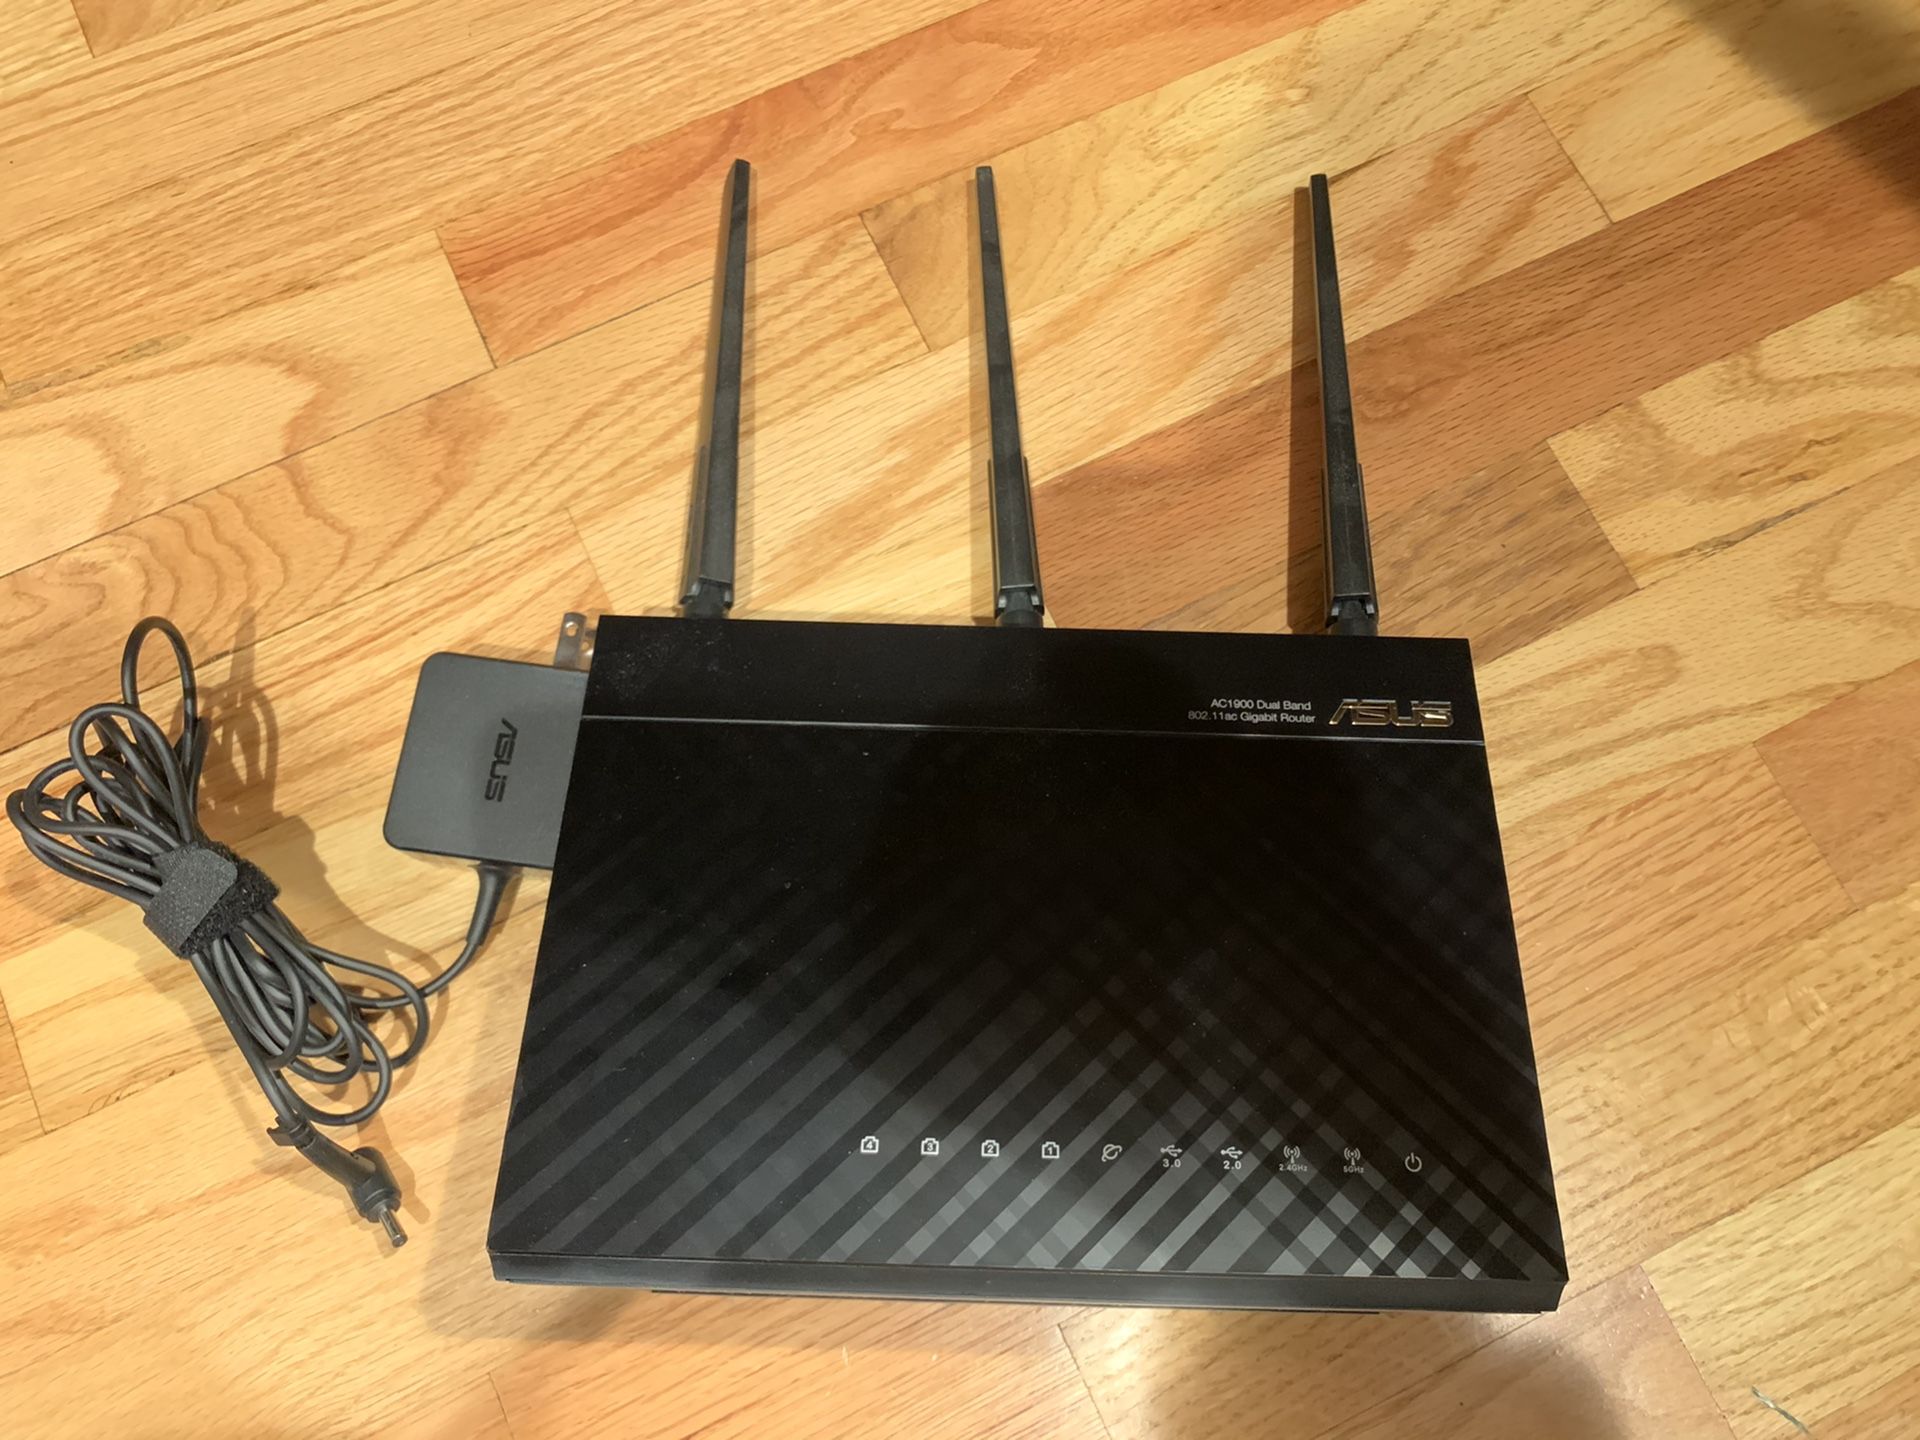 Asus AC1900 Dual Band 802.11ac Gigabit router